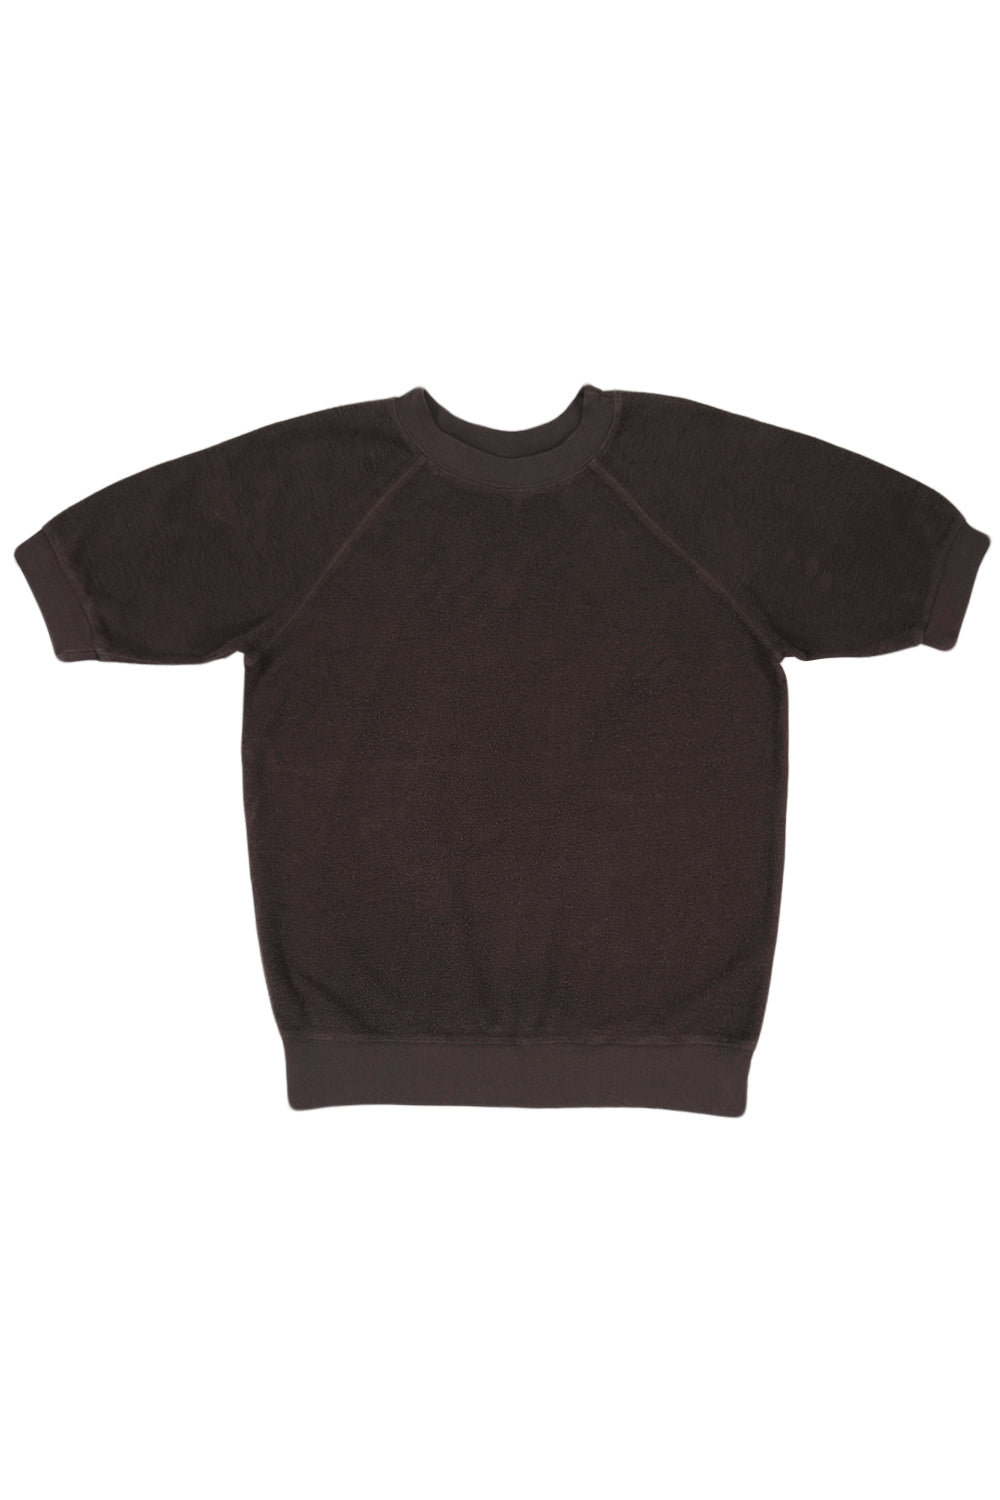 Short Sleeve Raglan Sherpa Sweatshirt | Jungmaven Hemp Clothing & Accessories / Color: Coffee Bean